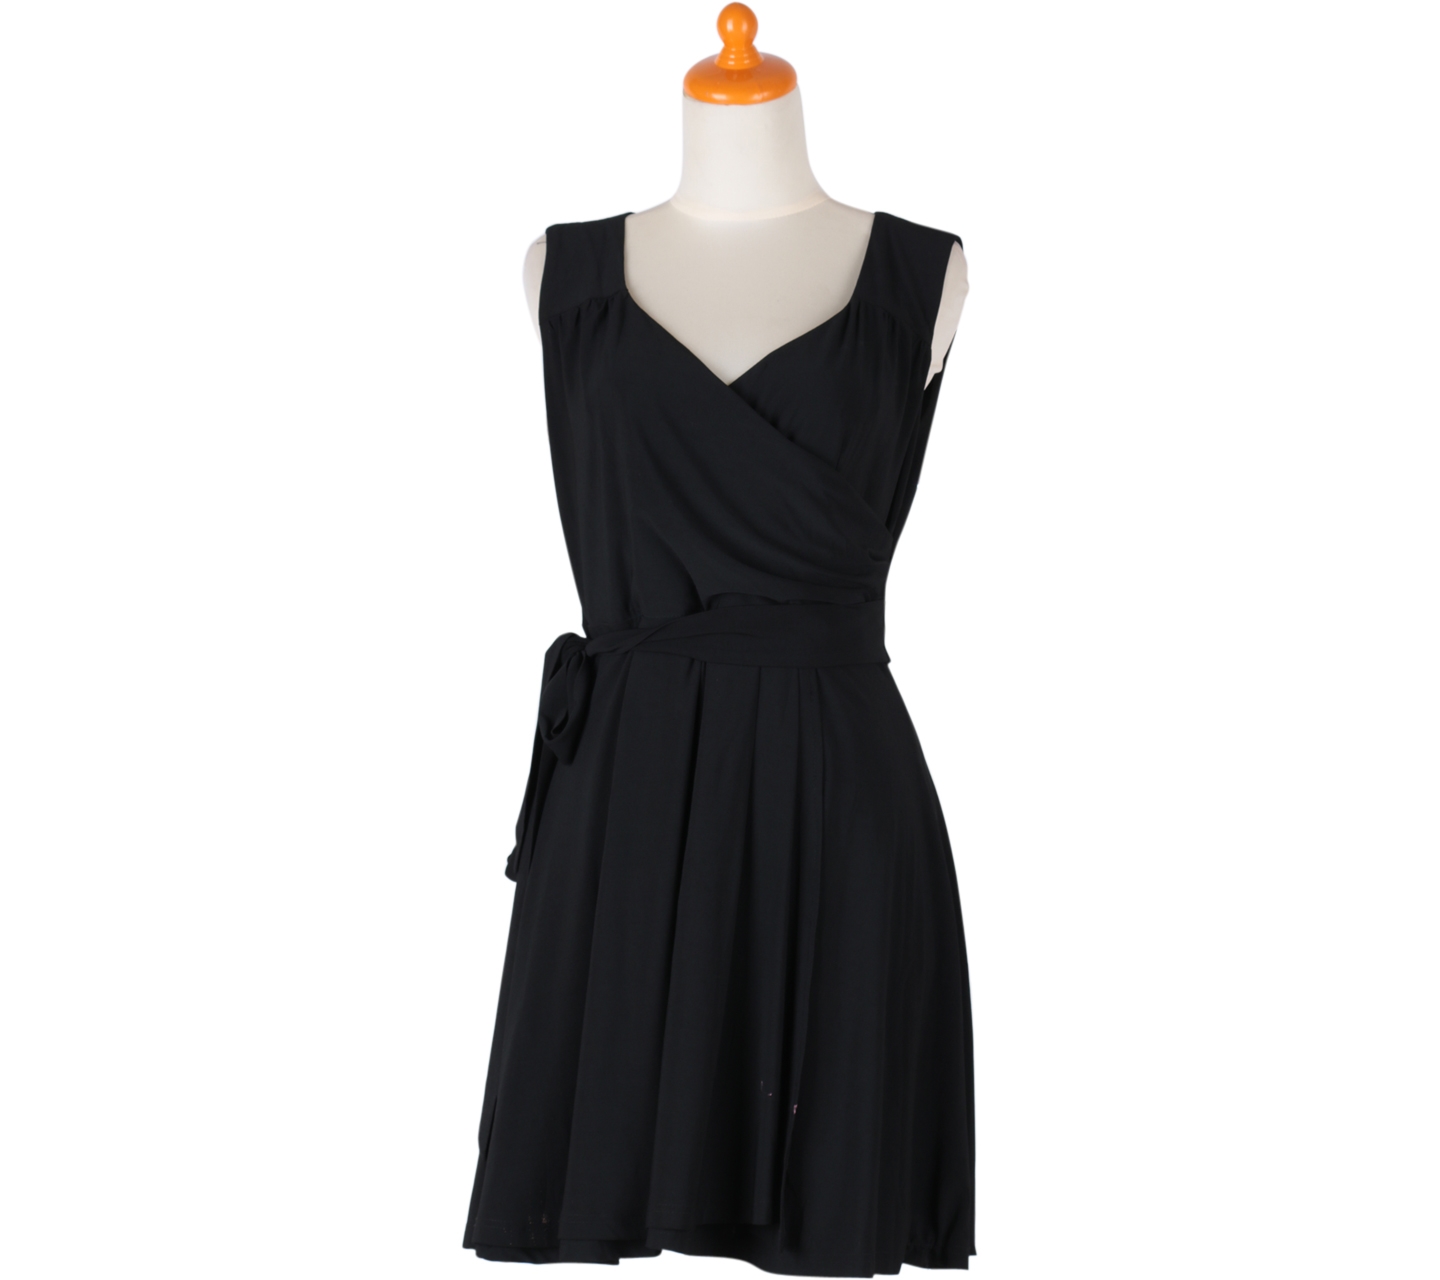 Arithalia Black Mini Dress